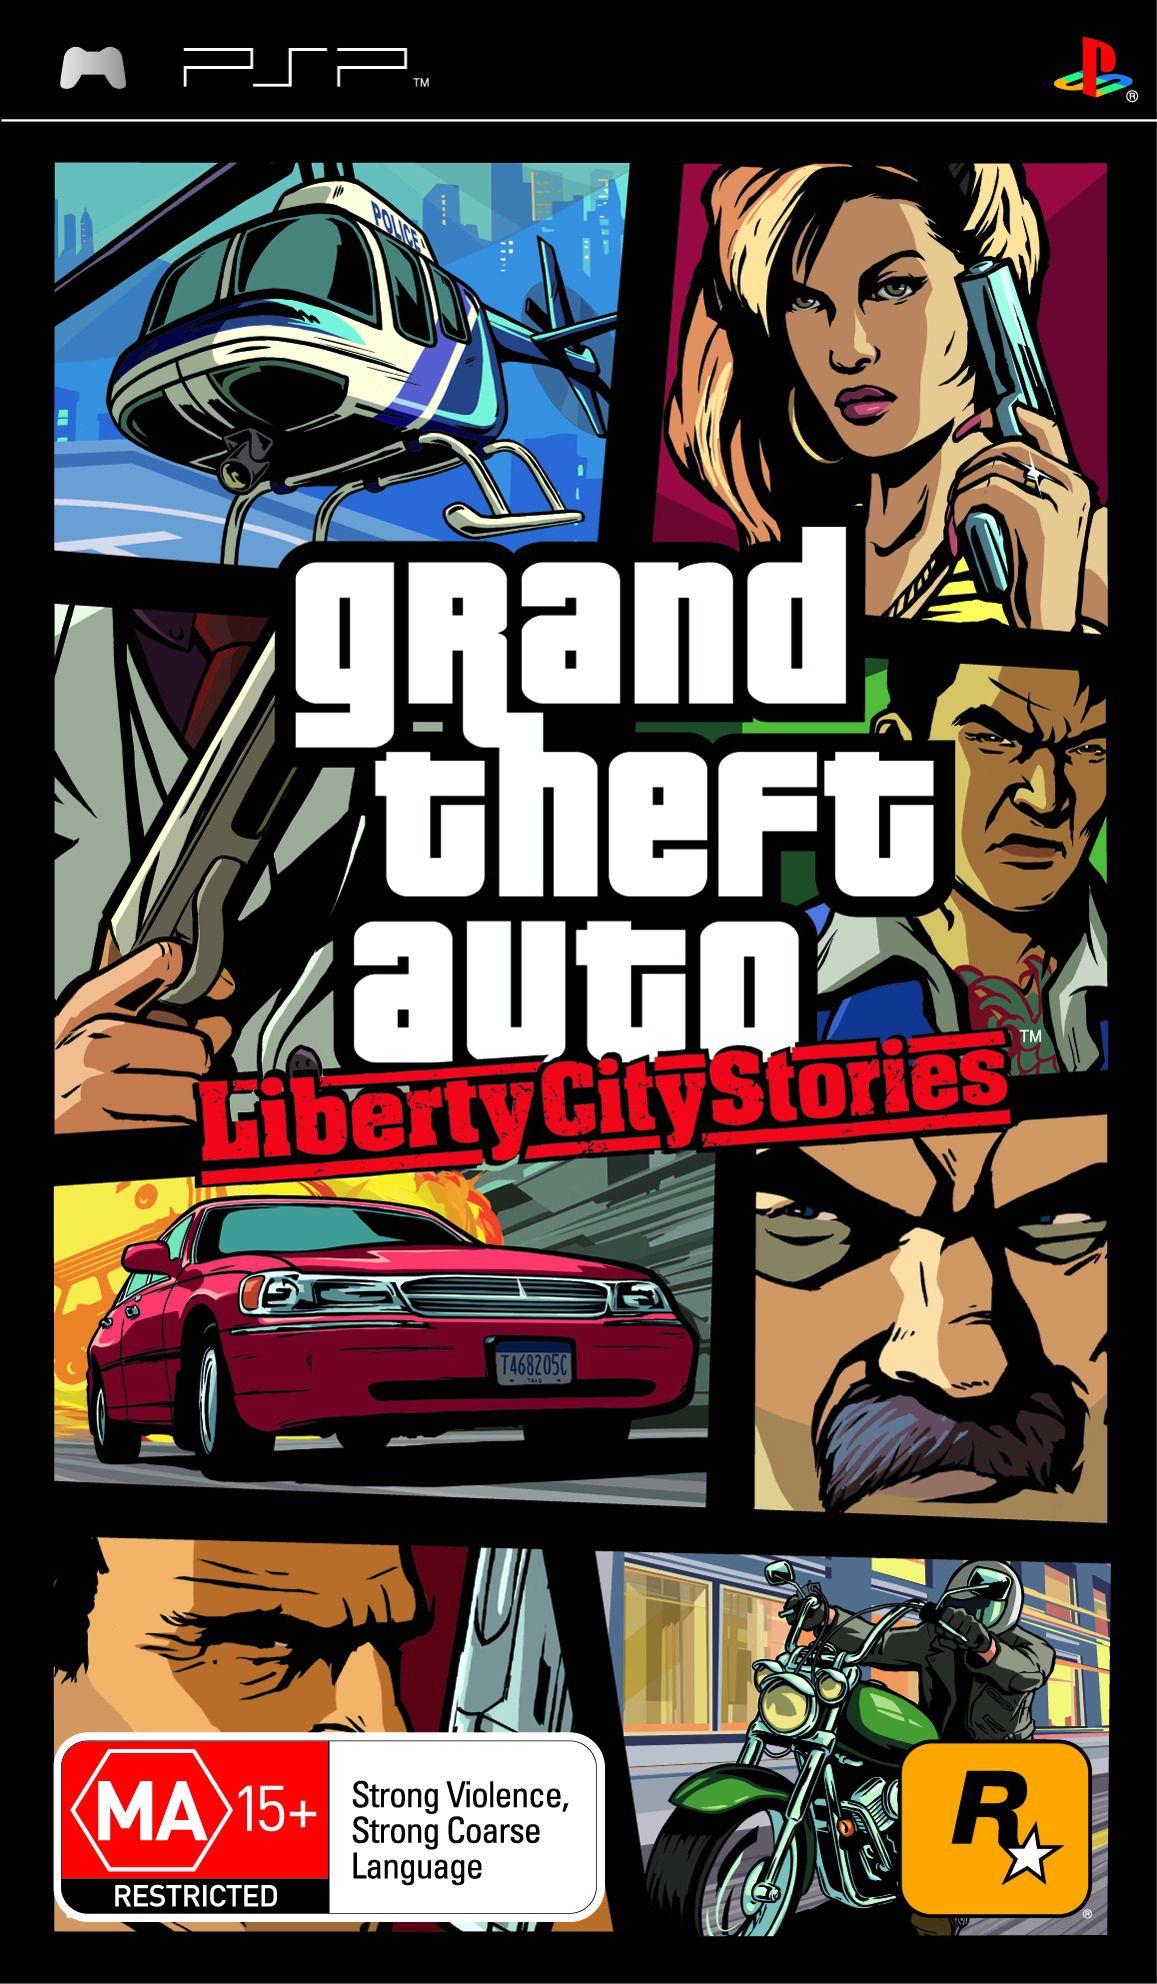 PS2] Grand Theft Auto Liberty City Stories V3.0 – Retro-Jogos